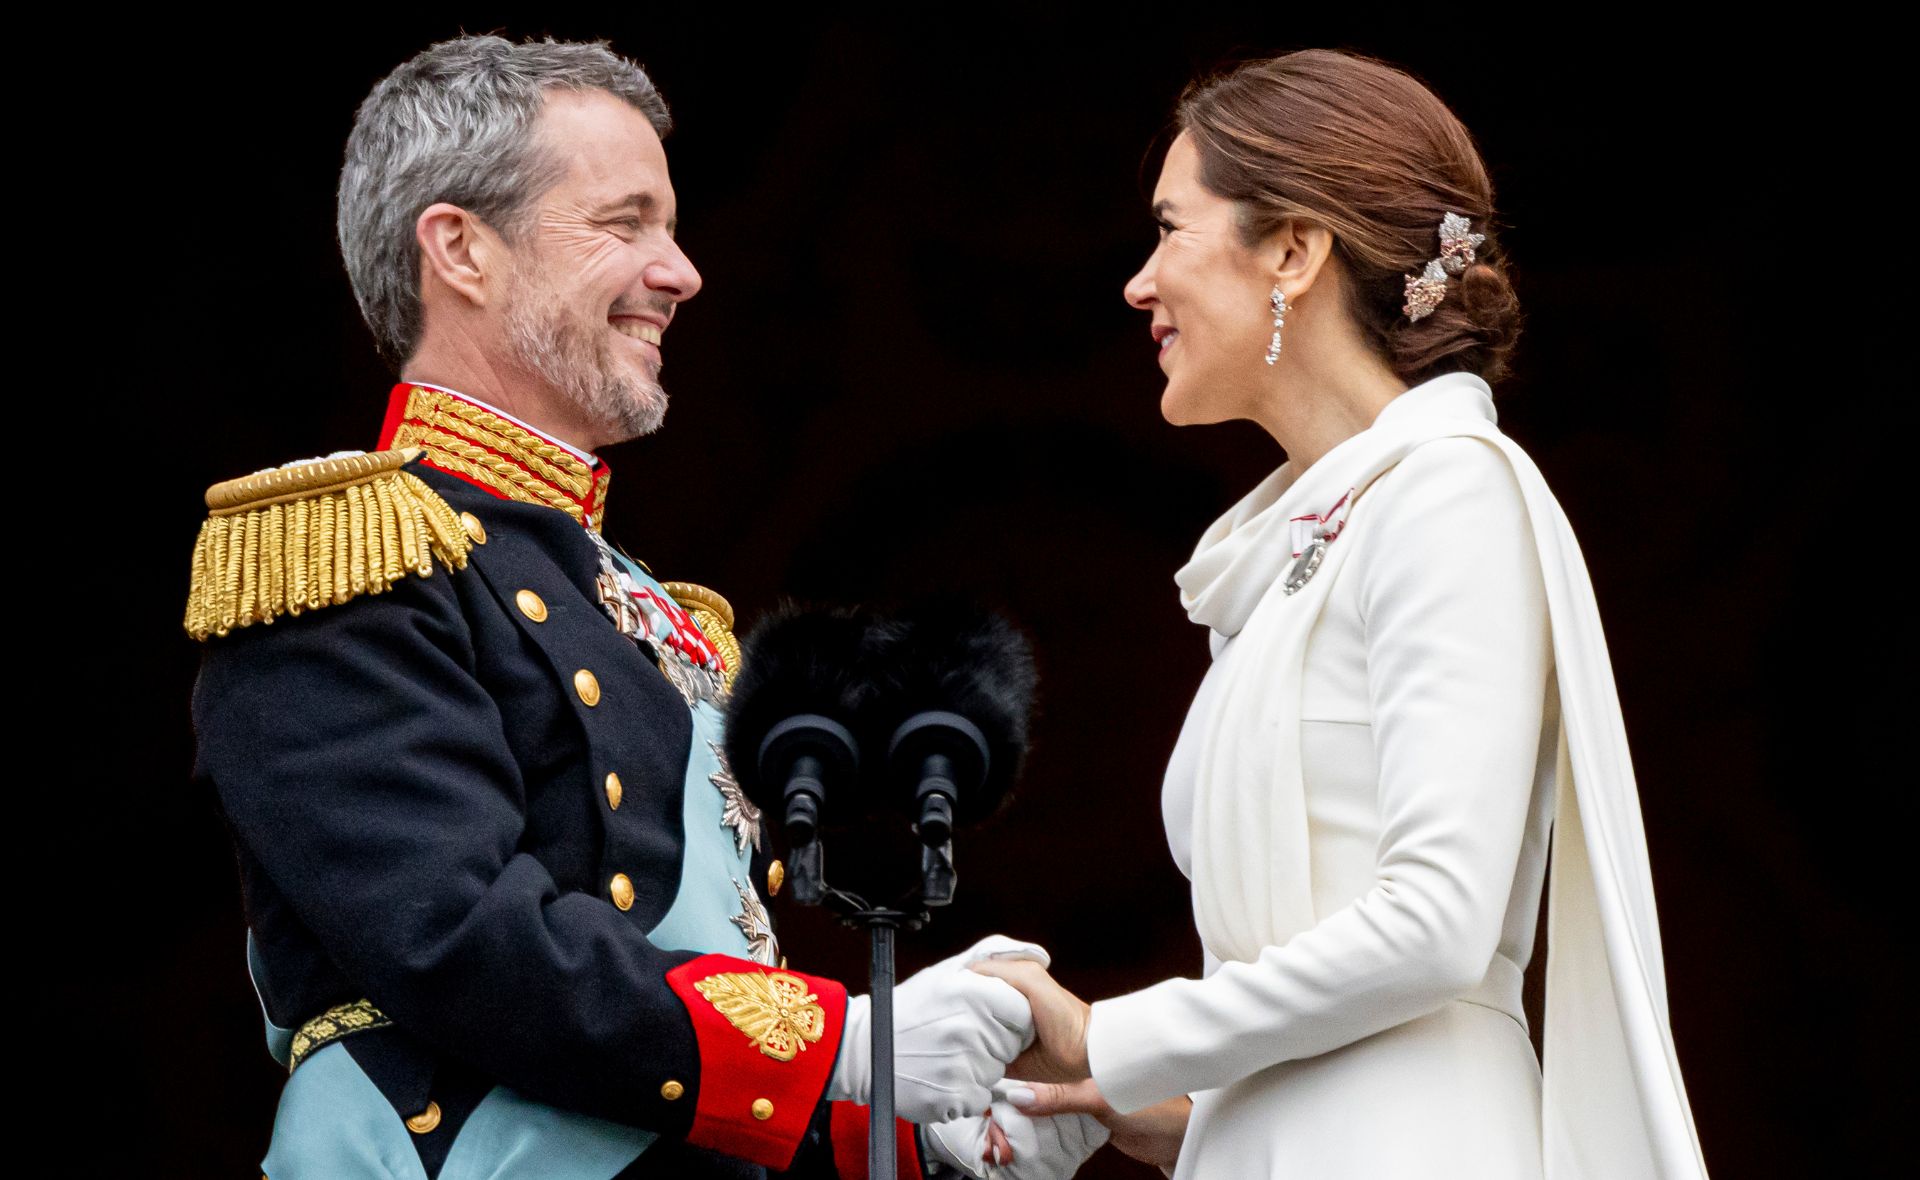 “I love marriage”: King Frederik praises wife, Queen Mary in new memoir